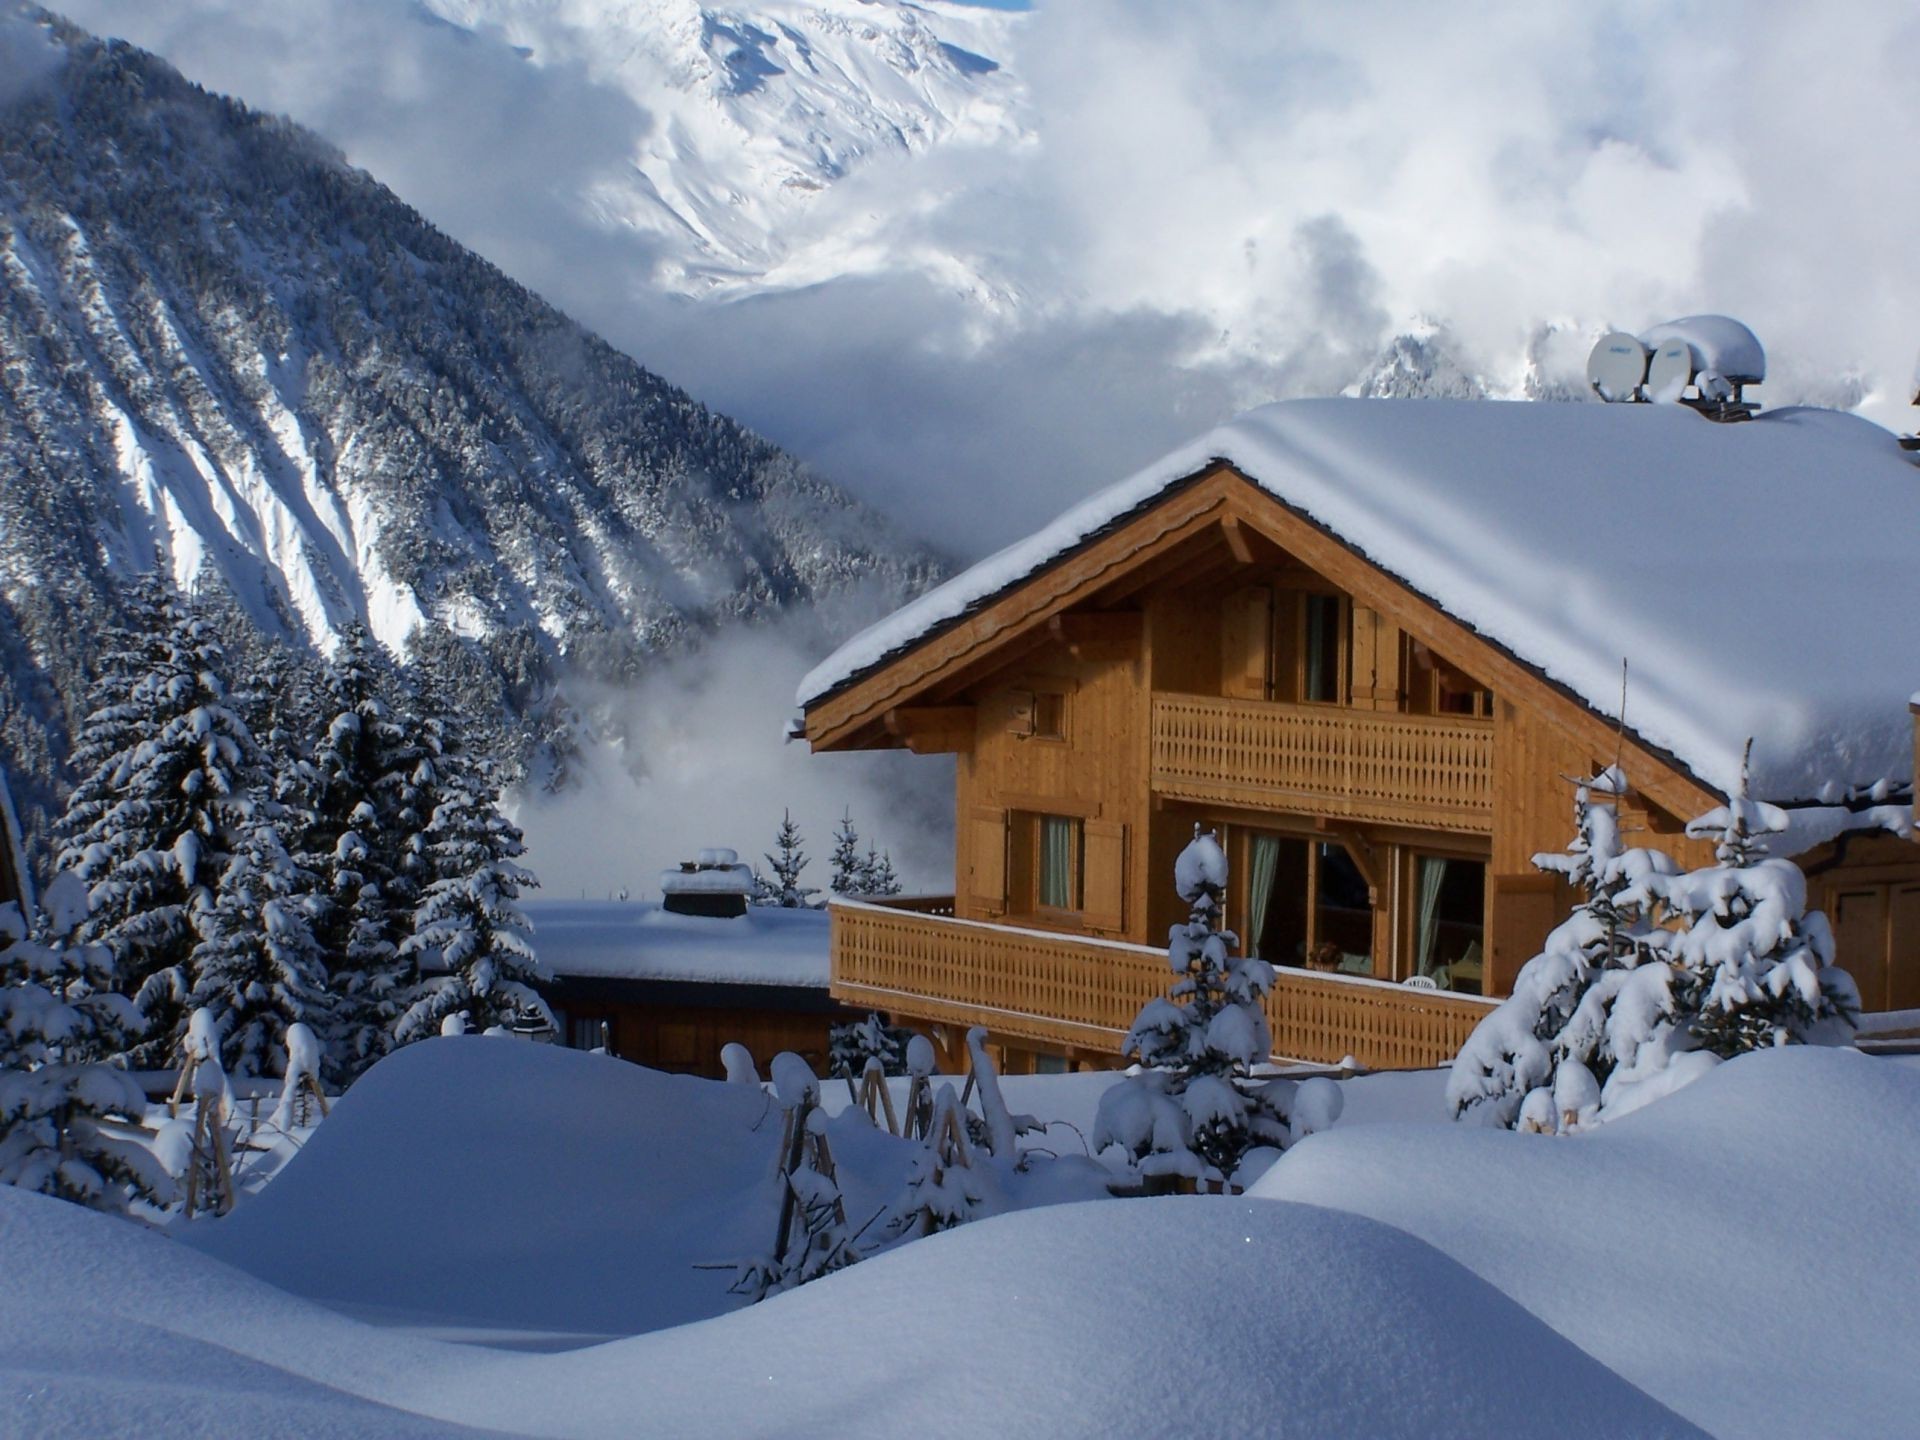 winter snow cold chalet mountain frozen resort ice wood frost hut snowy scenic snowdrift weather alpine landscape cabin house